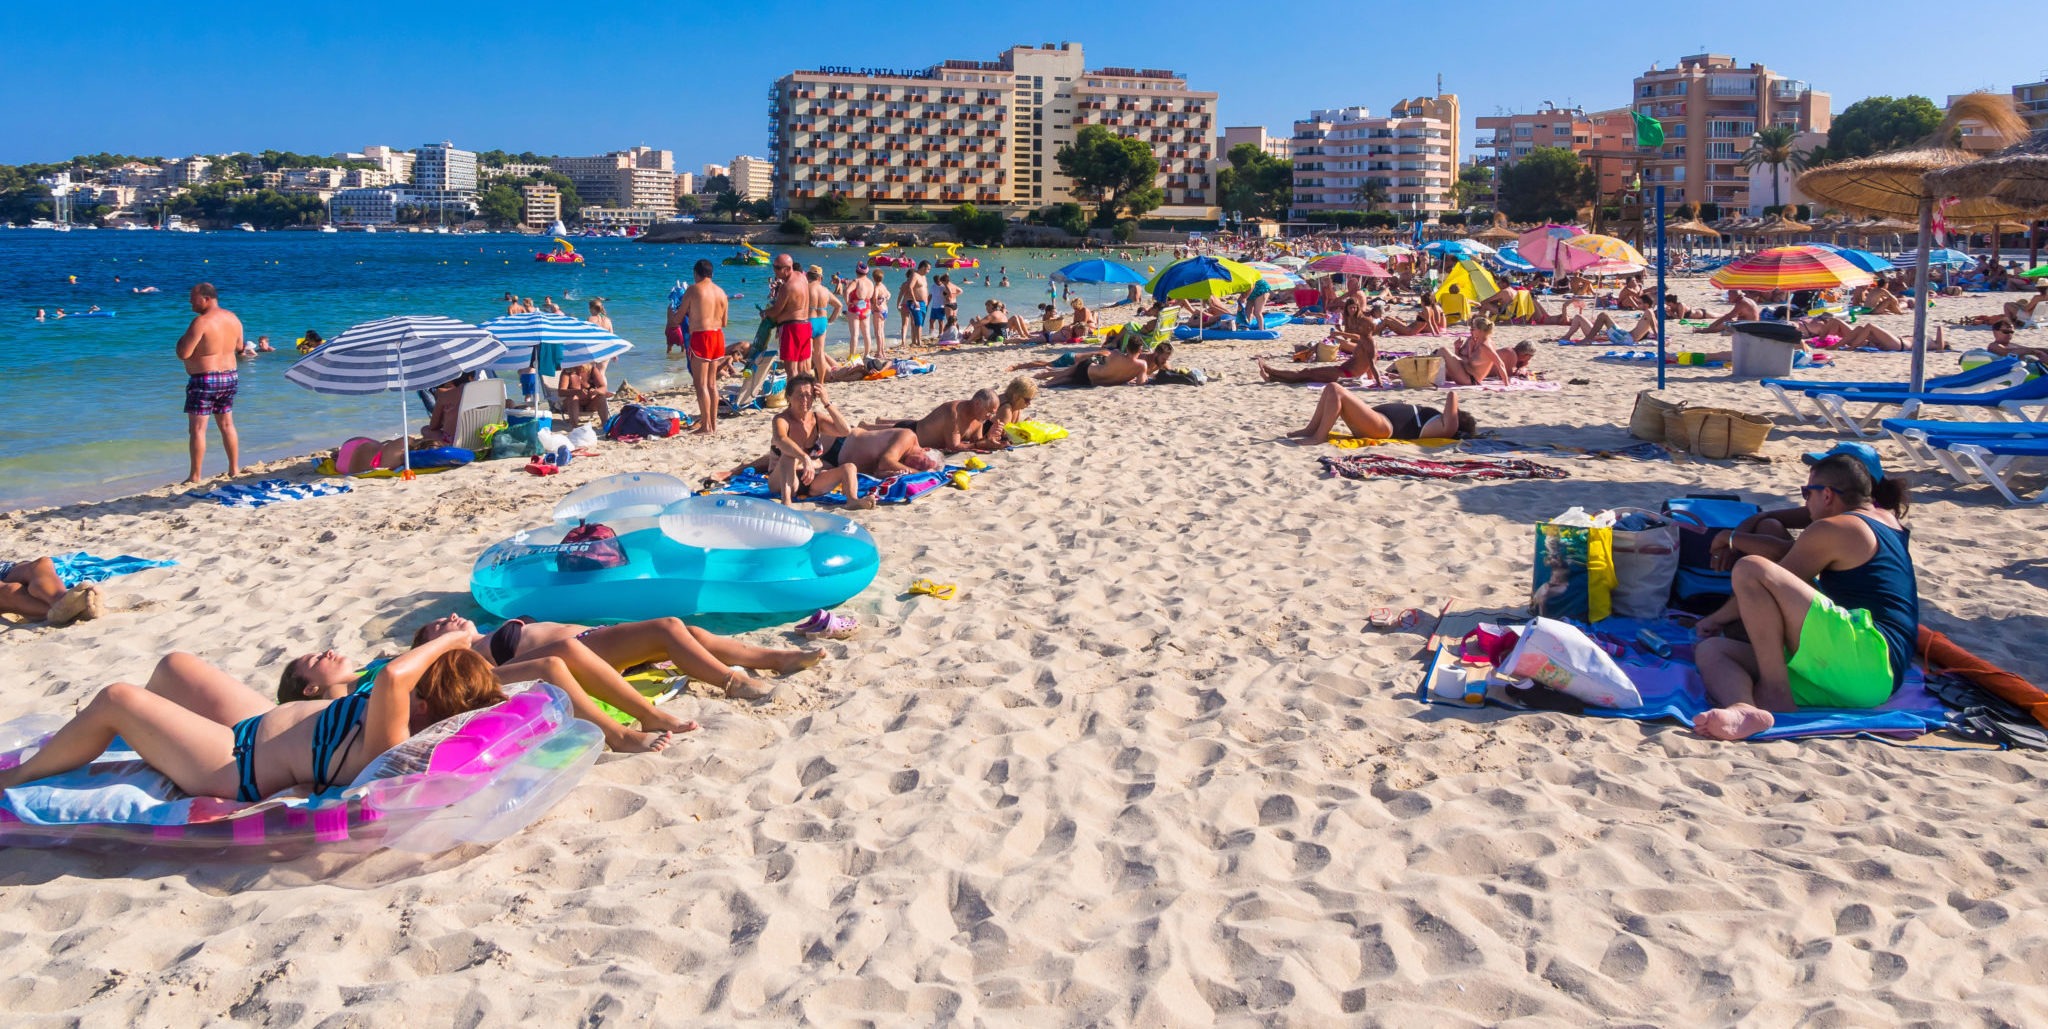 The beach in Magaluf, Mallorca. Image: Westend61 GmbH / Alamy Stock Photo